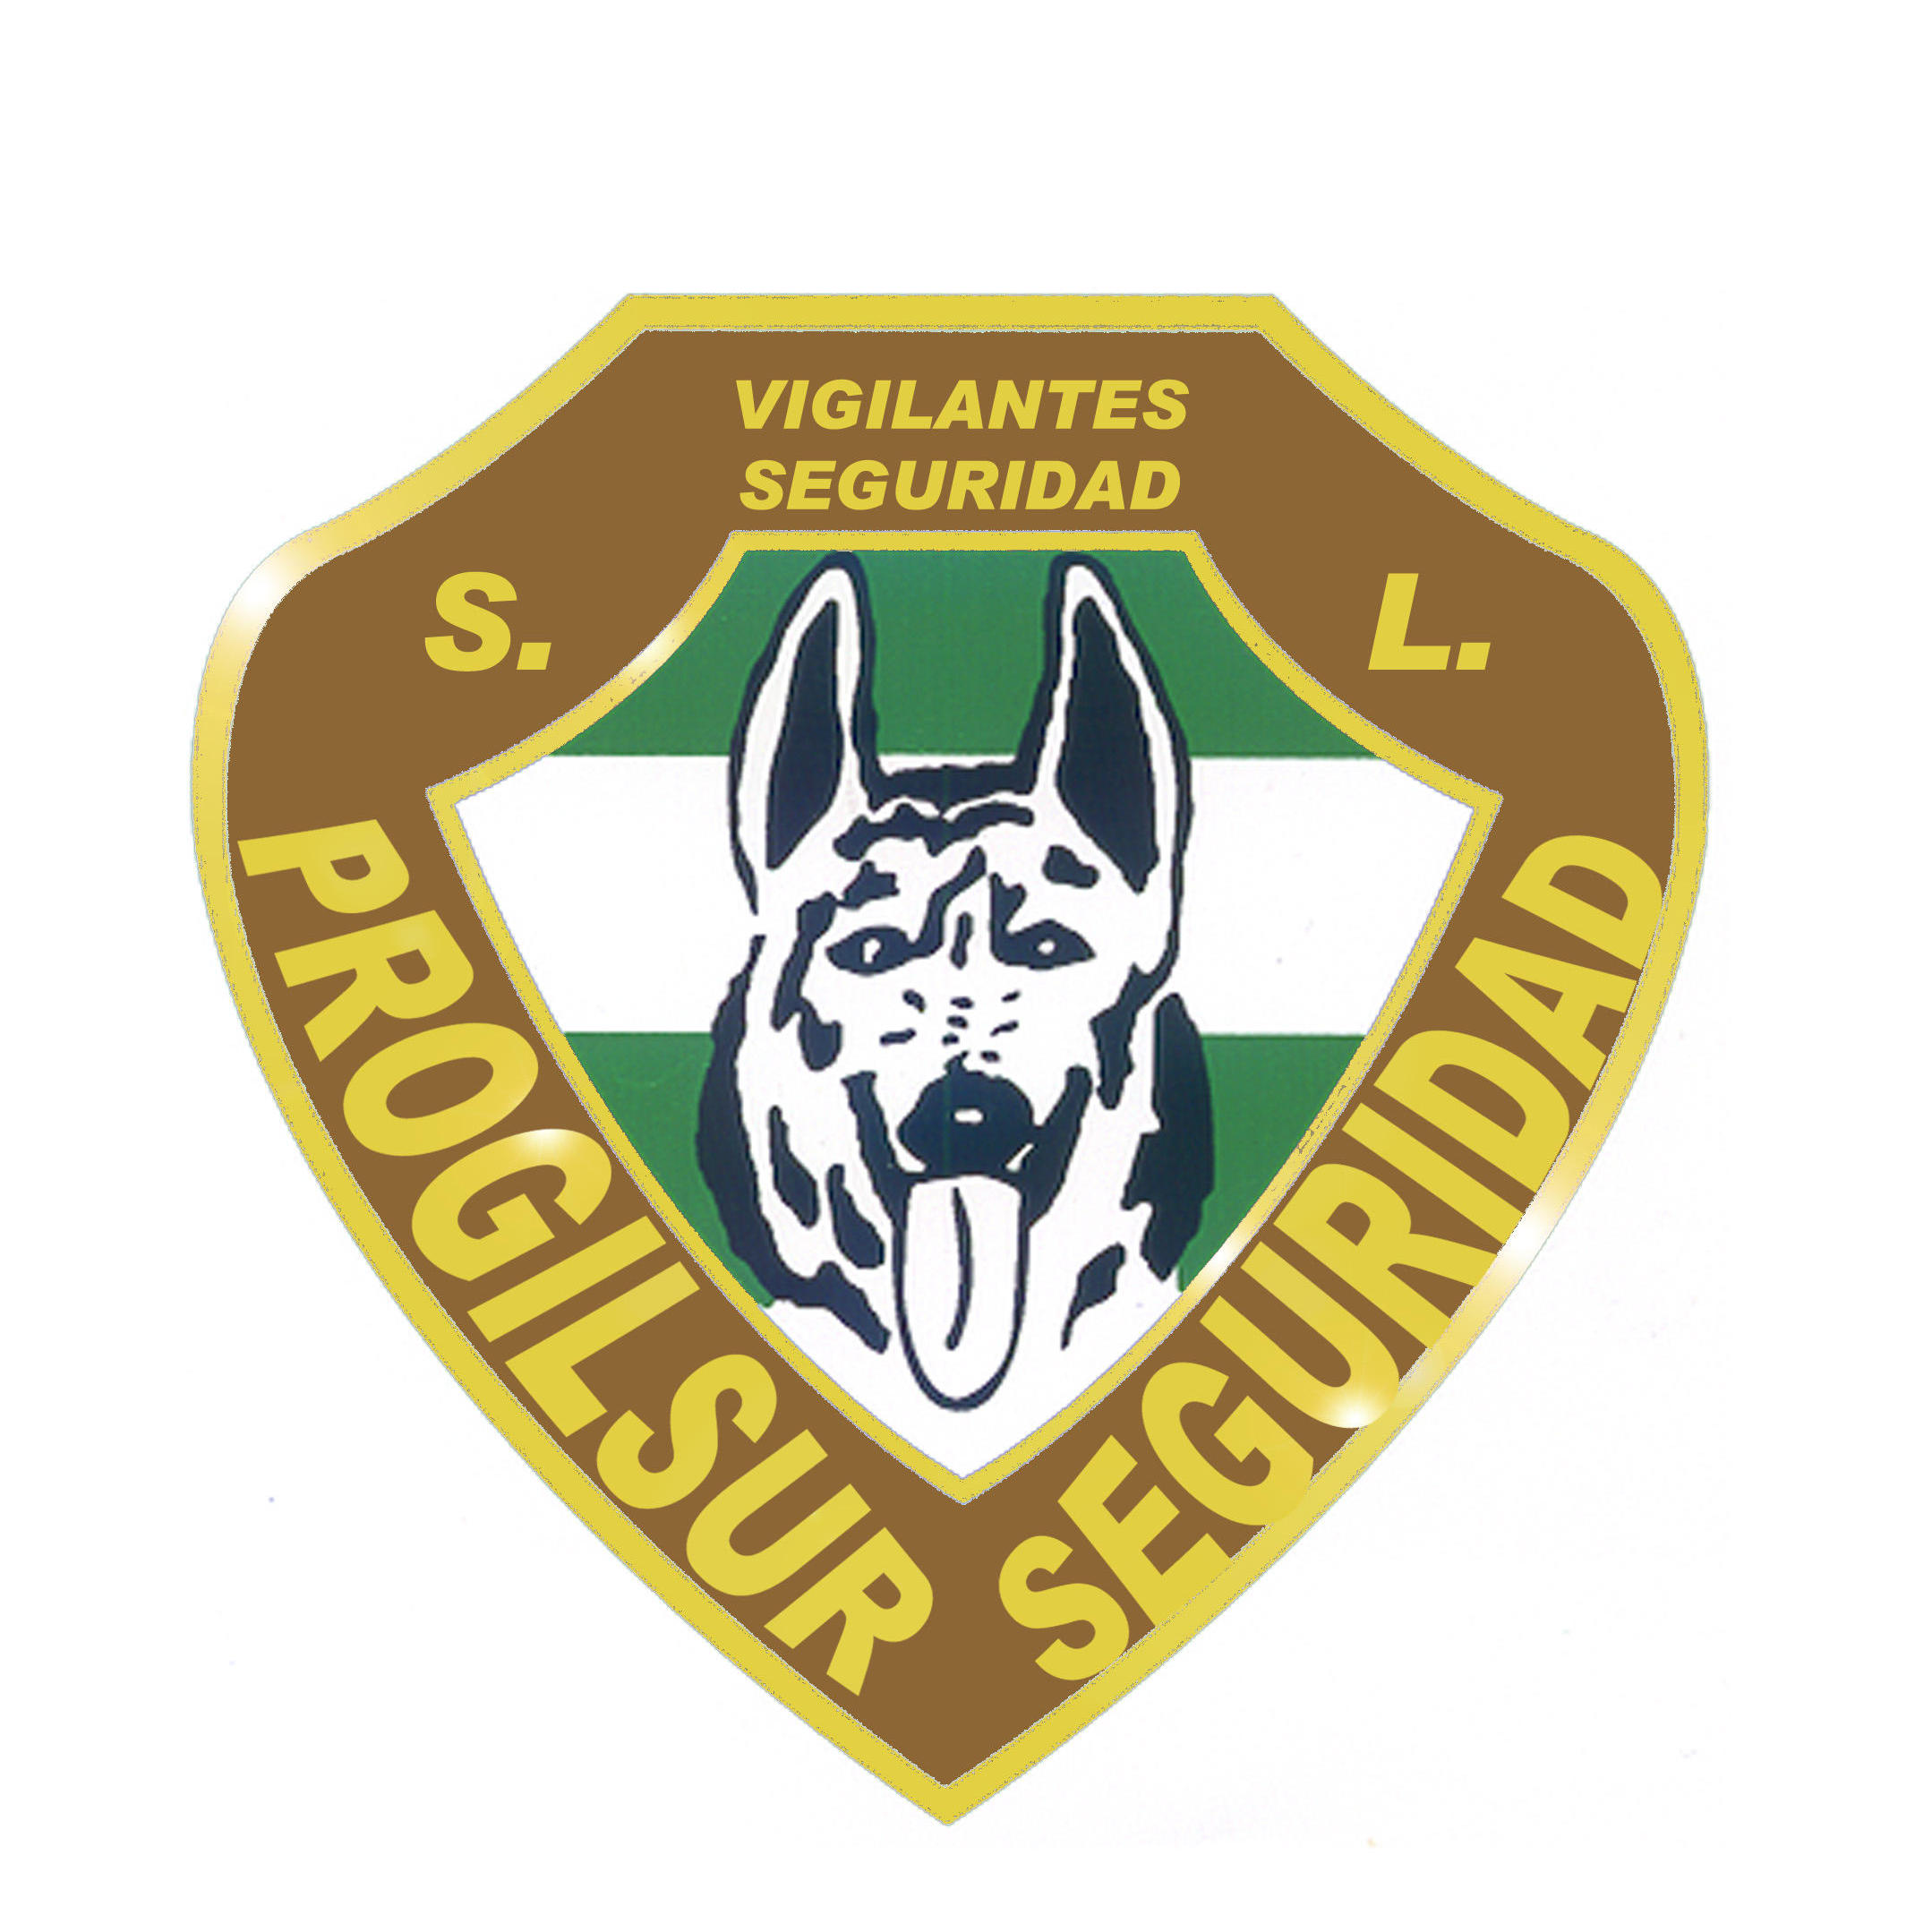 Progilsur Seguridad - Security Guard Service - Jerez de la Frontera - 956 31 13 33 Spain | ShowMeLocal.com